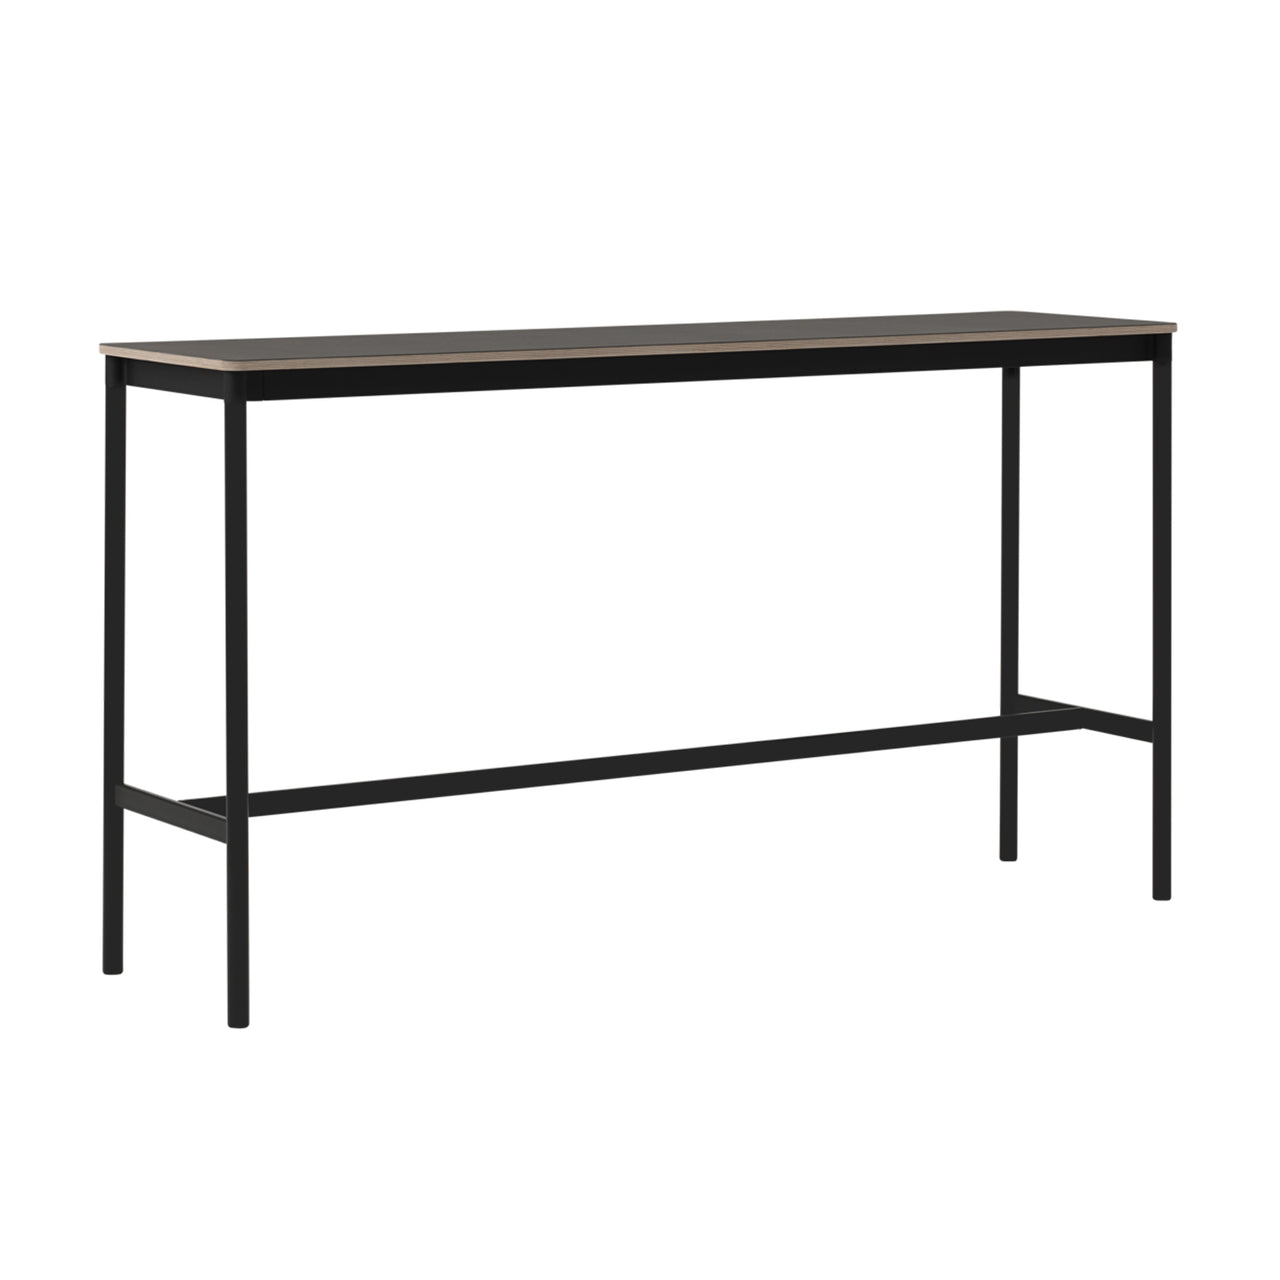 Base High Table: Black Linoleum + Plywood Edge + Black